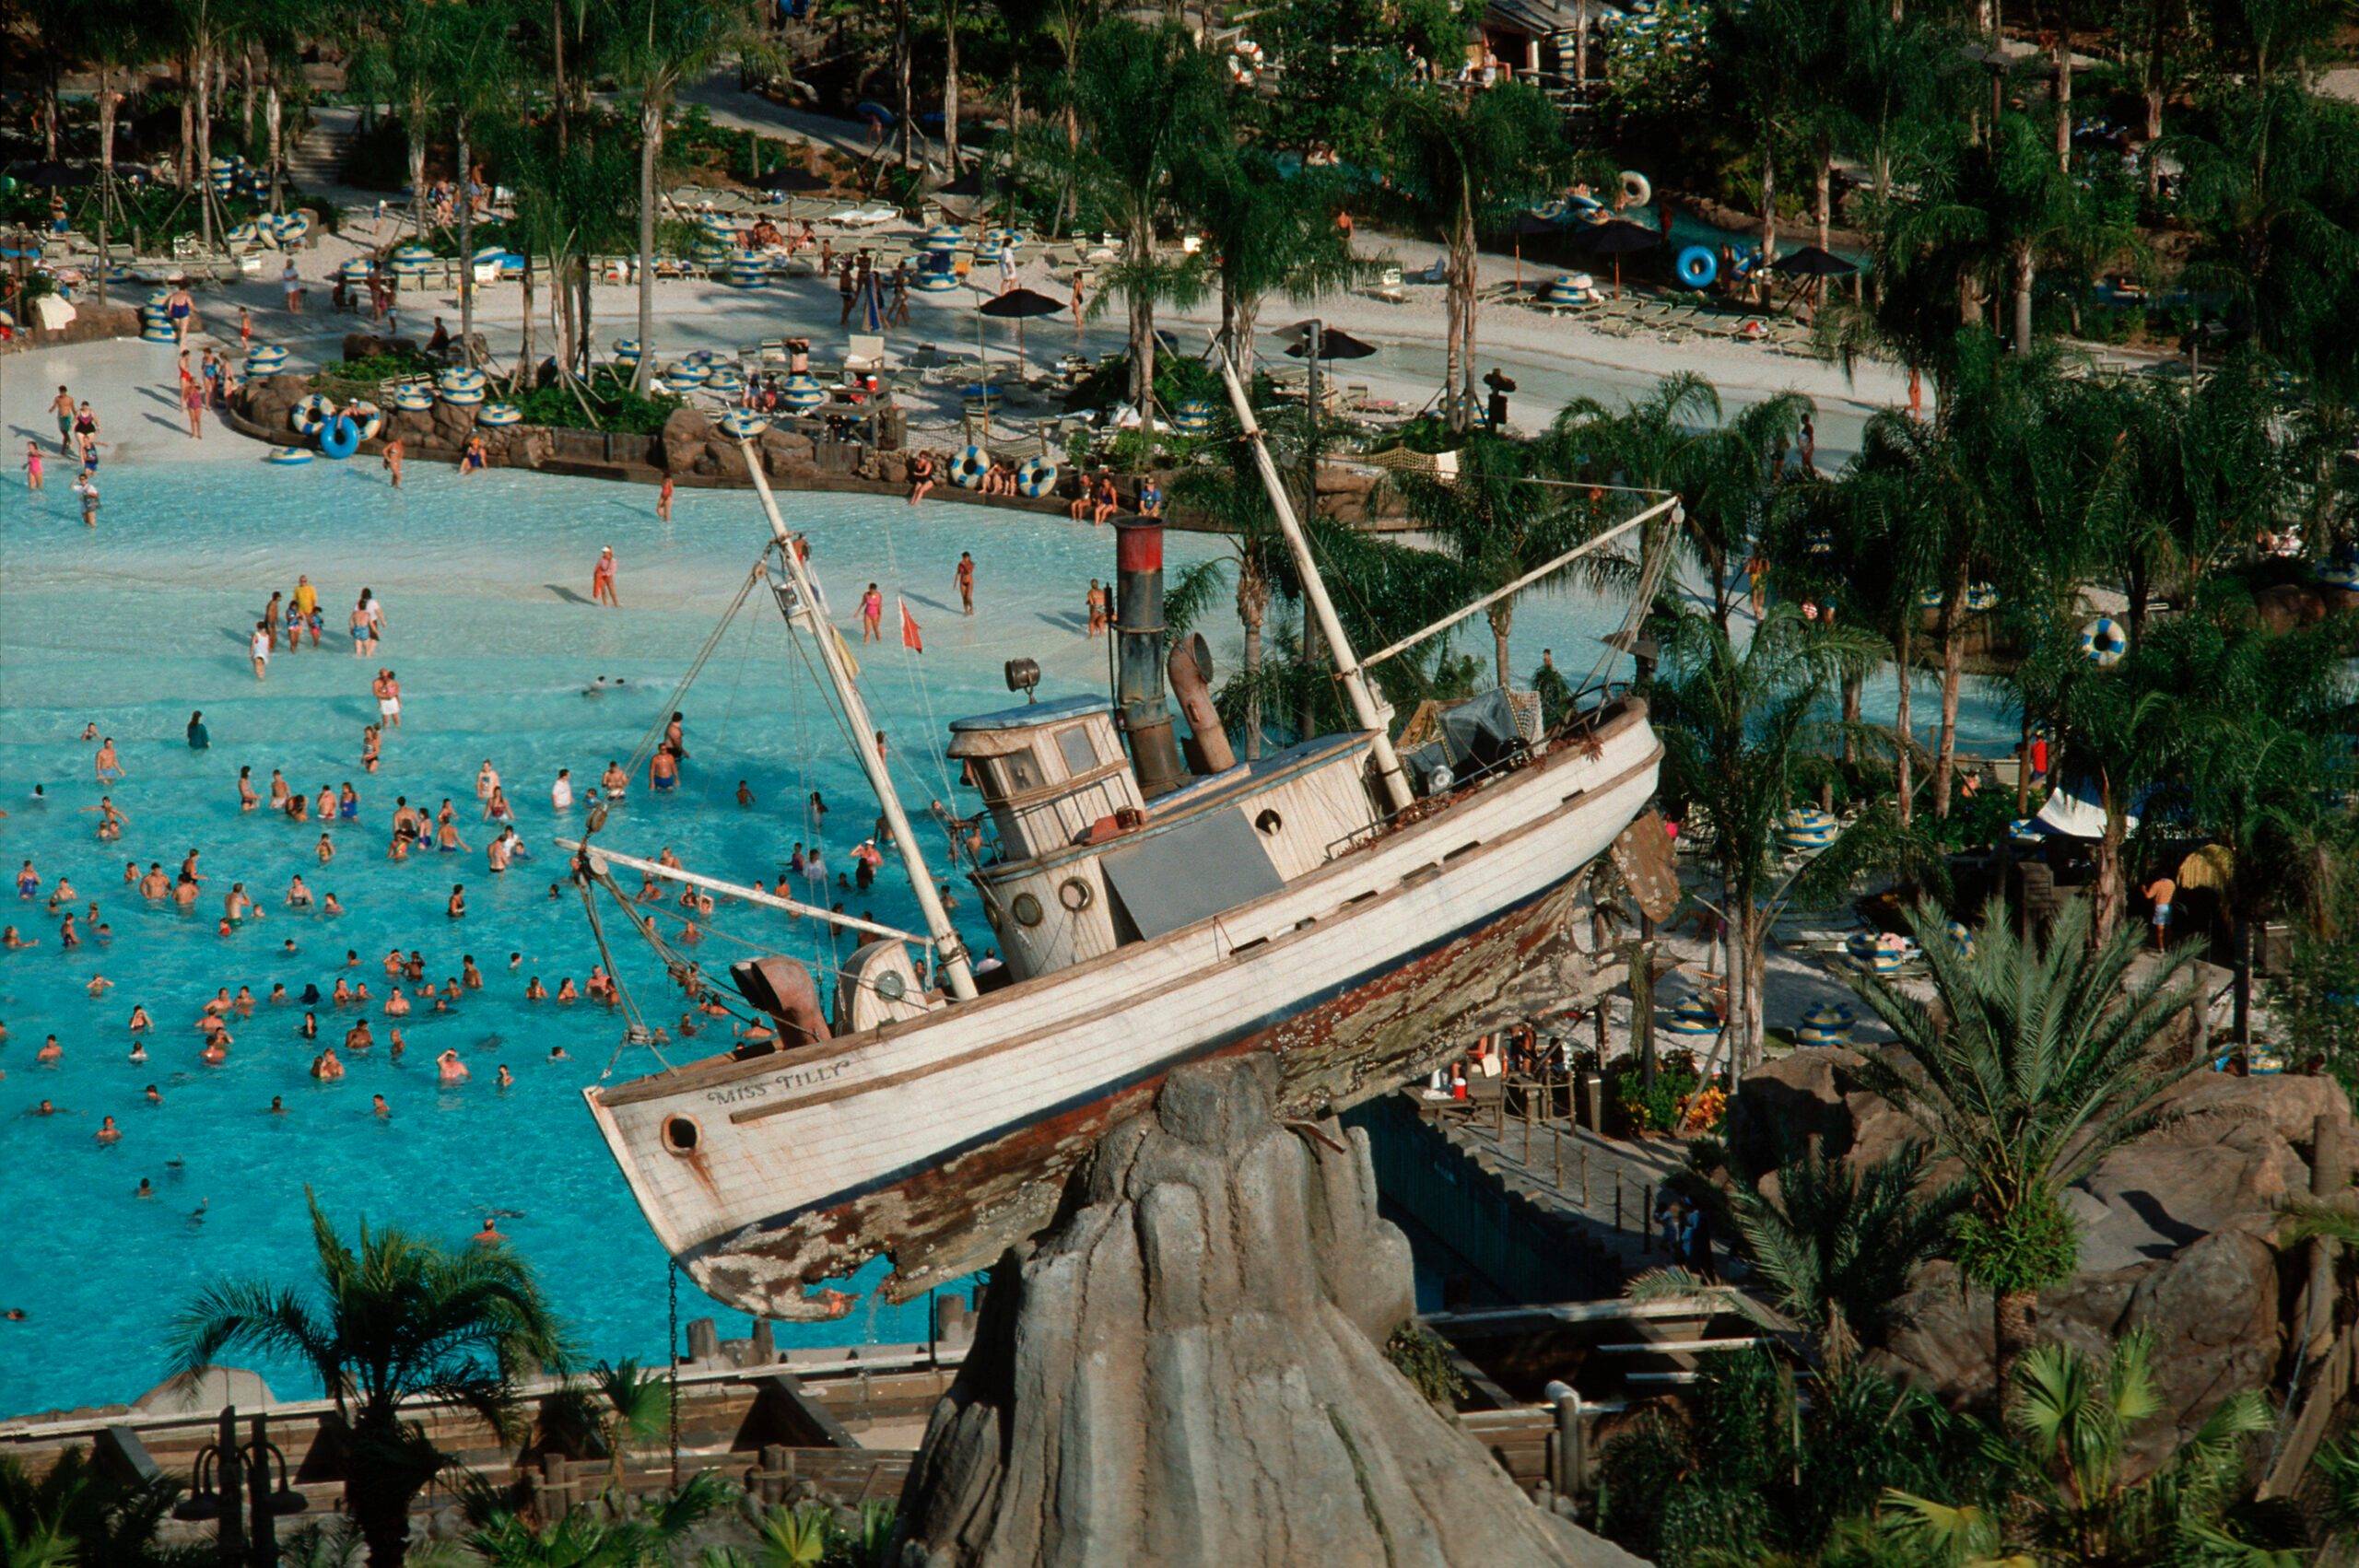 Disney’s Typhoon Lagoon water park during its opening year in 1989 at Walt Disney World Resort